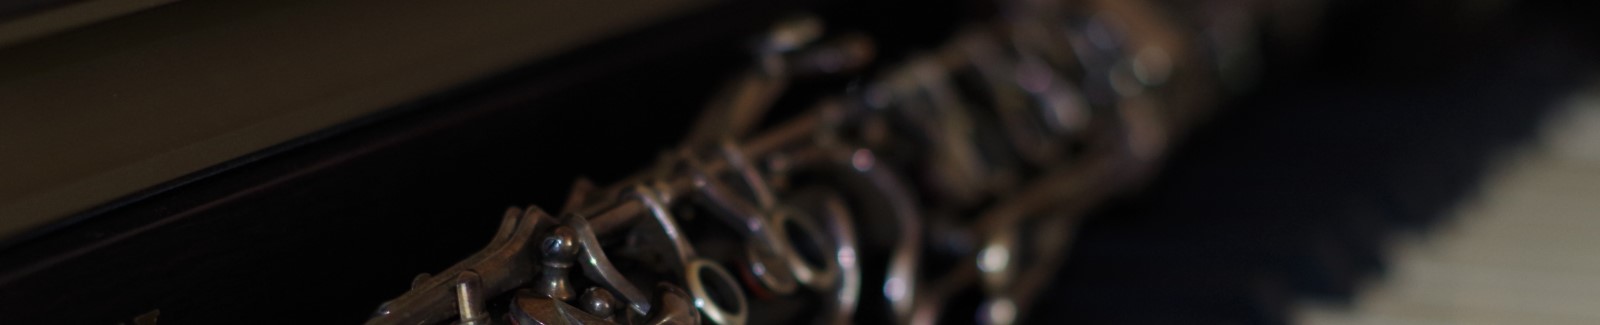 Hampshire music teacher and musician tutor for clarinet saxophone